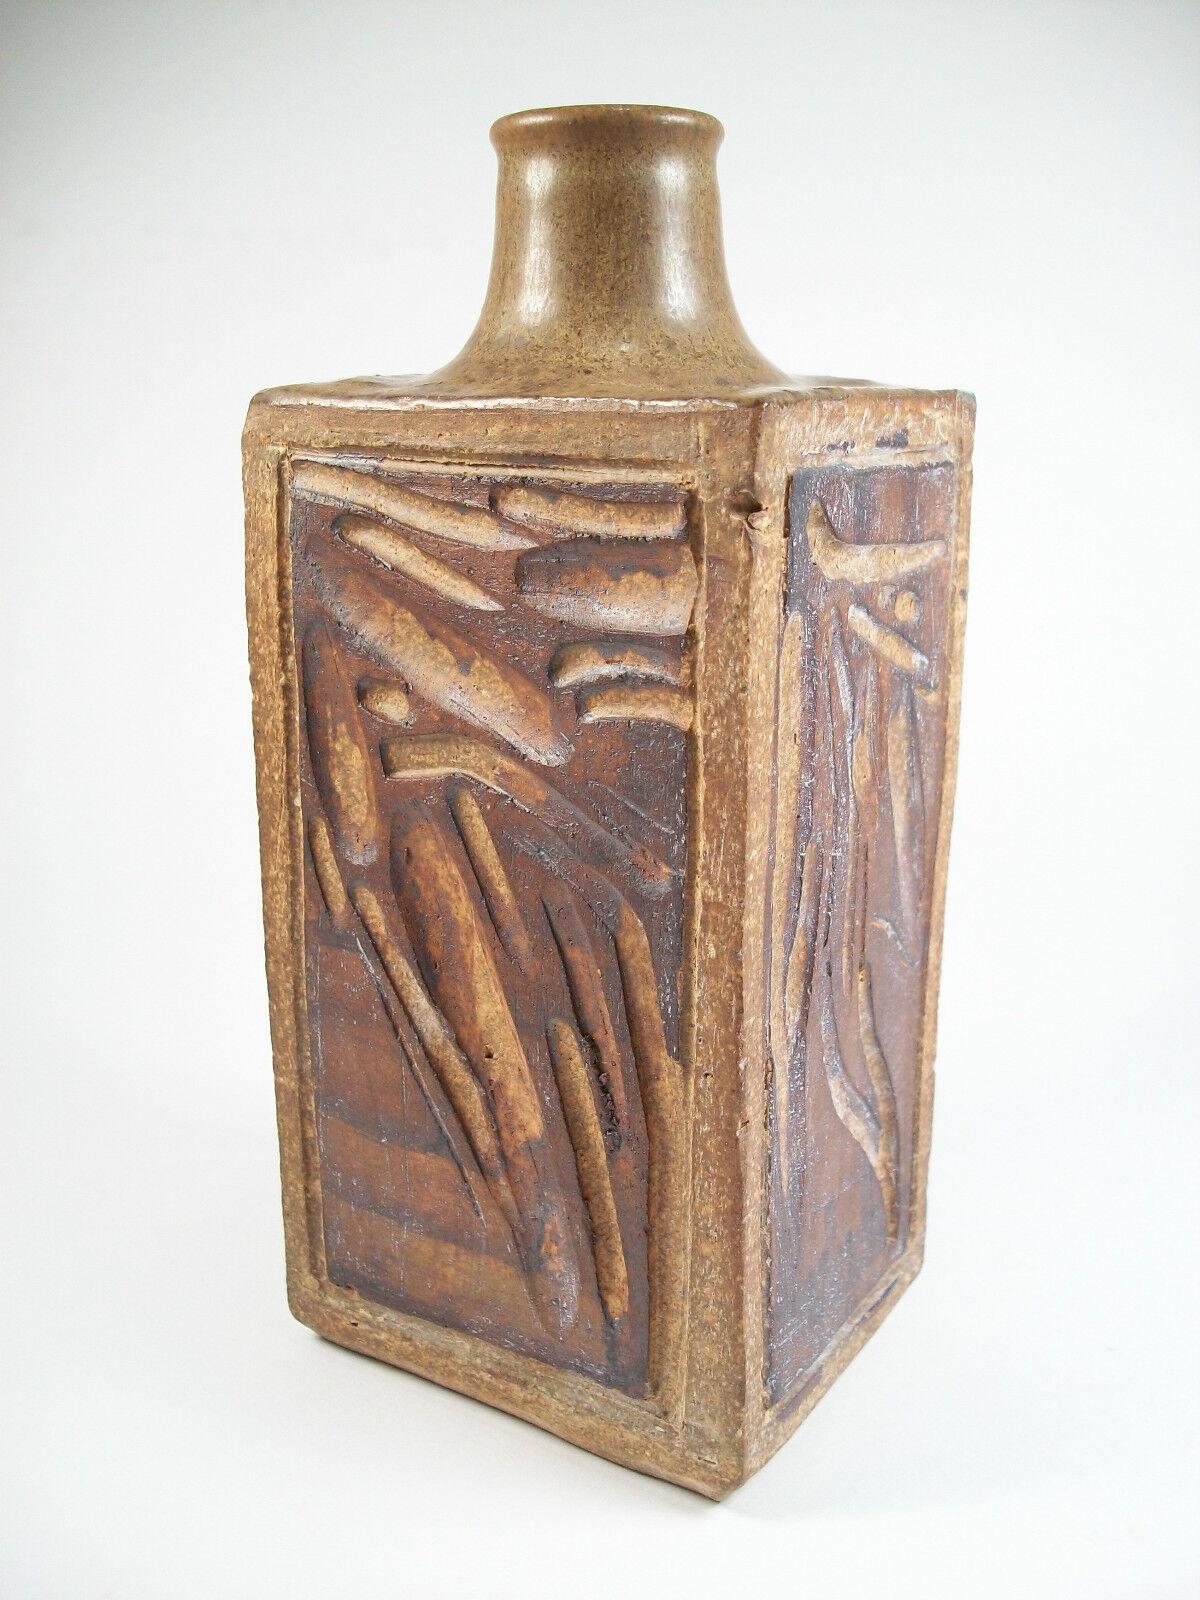 Canadian VILT - Cut-Sided & Glazed Stoneware Studio Pottery Vase - Signed - 20th Century For Sale